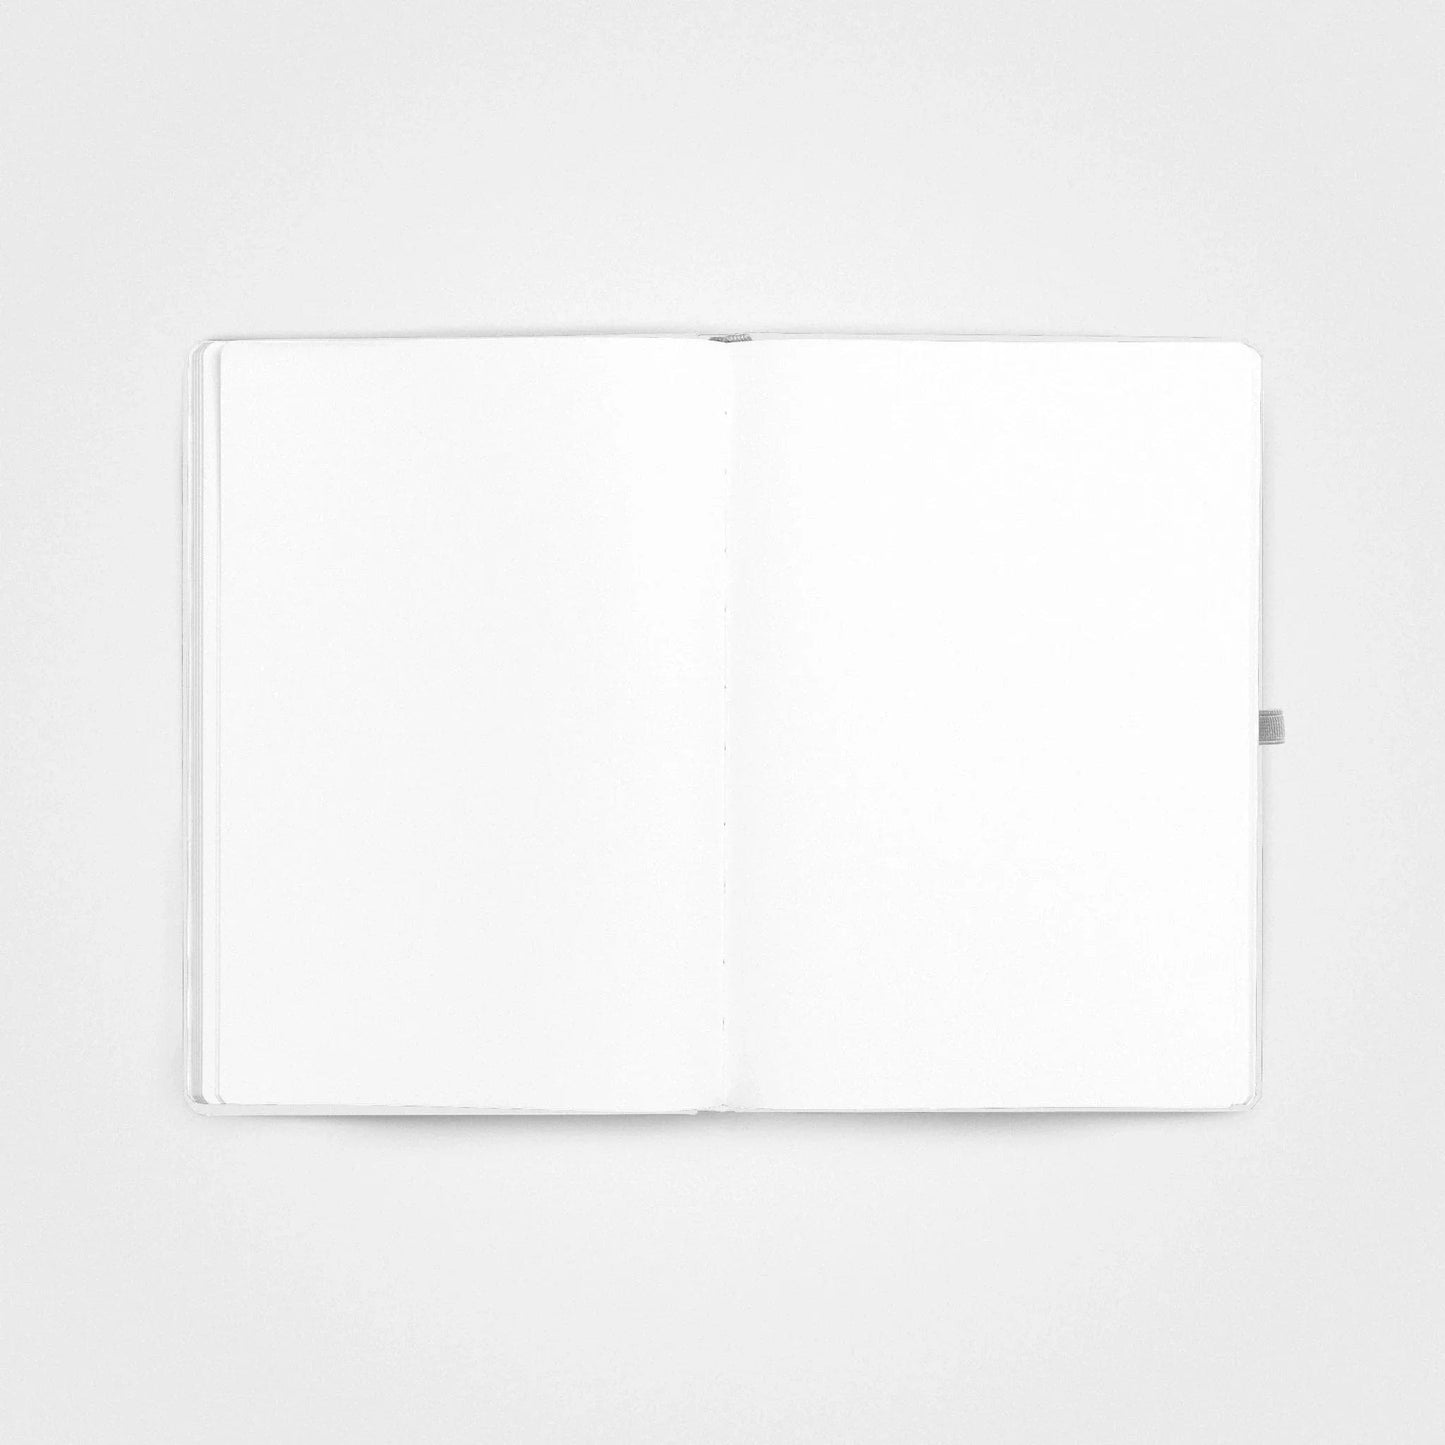 Steinpapier-Notizbuch – A5 Hardcover, Christian Beijer | Girl with a dress, white